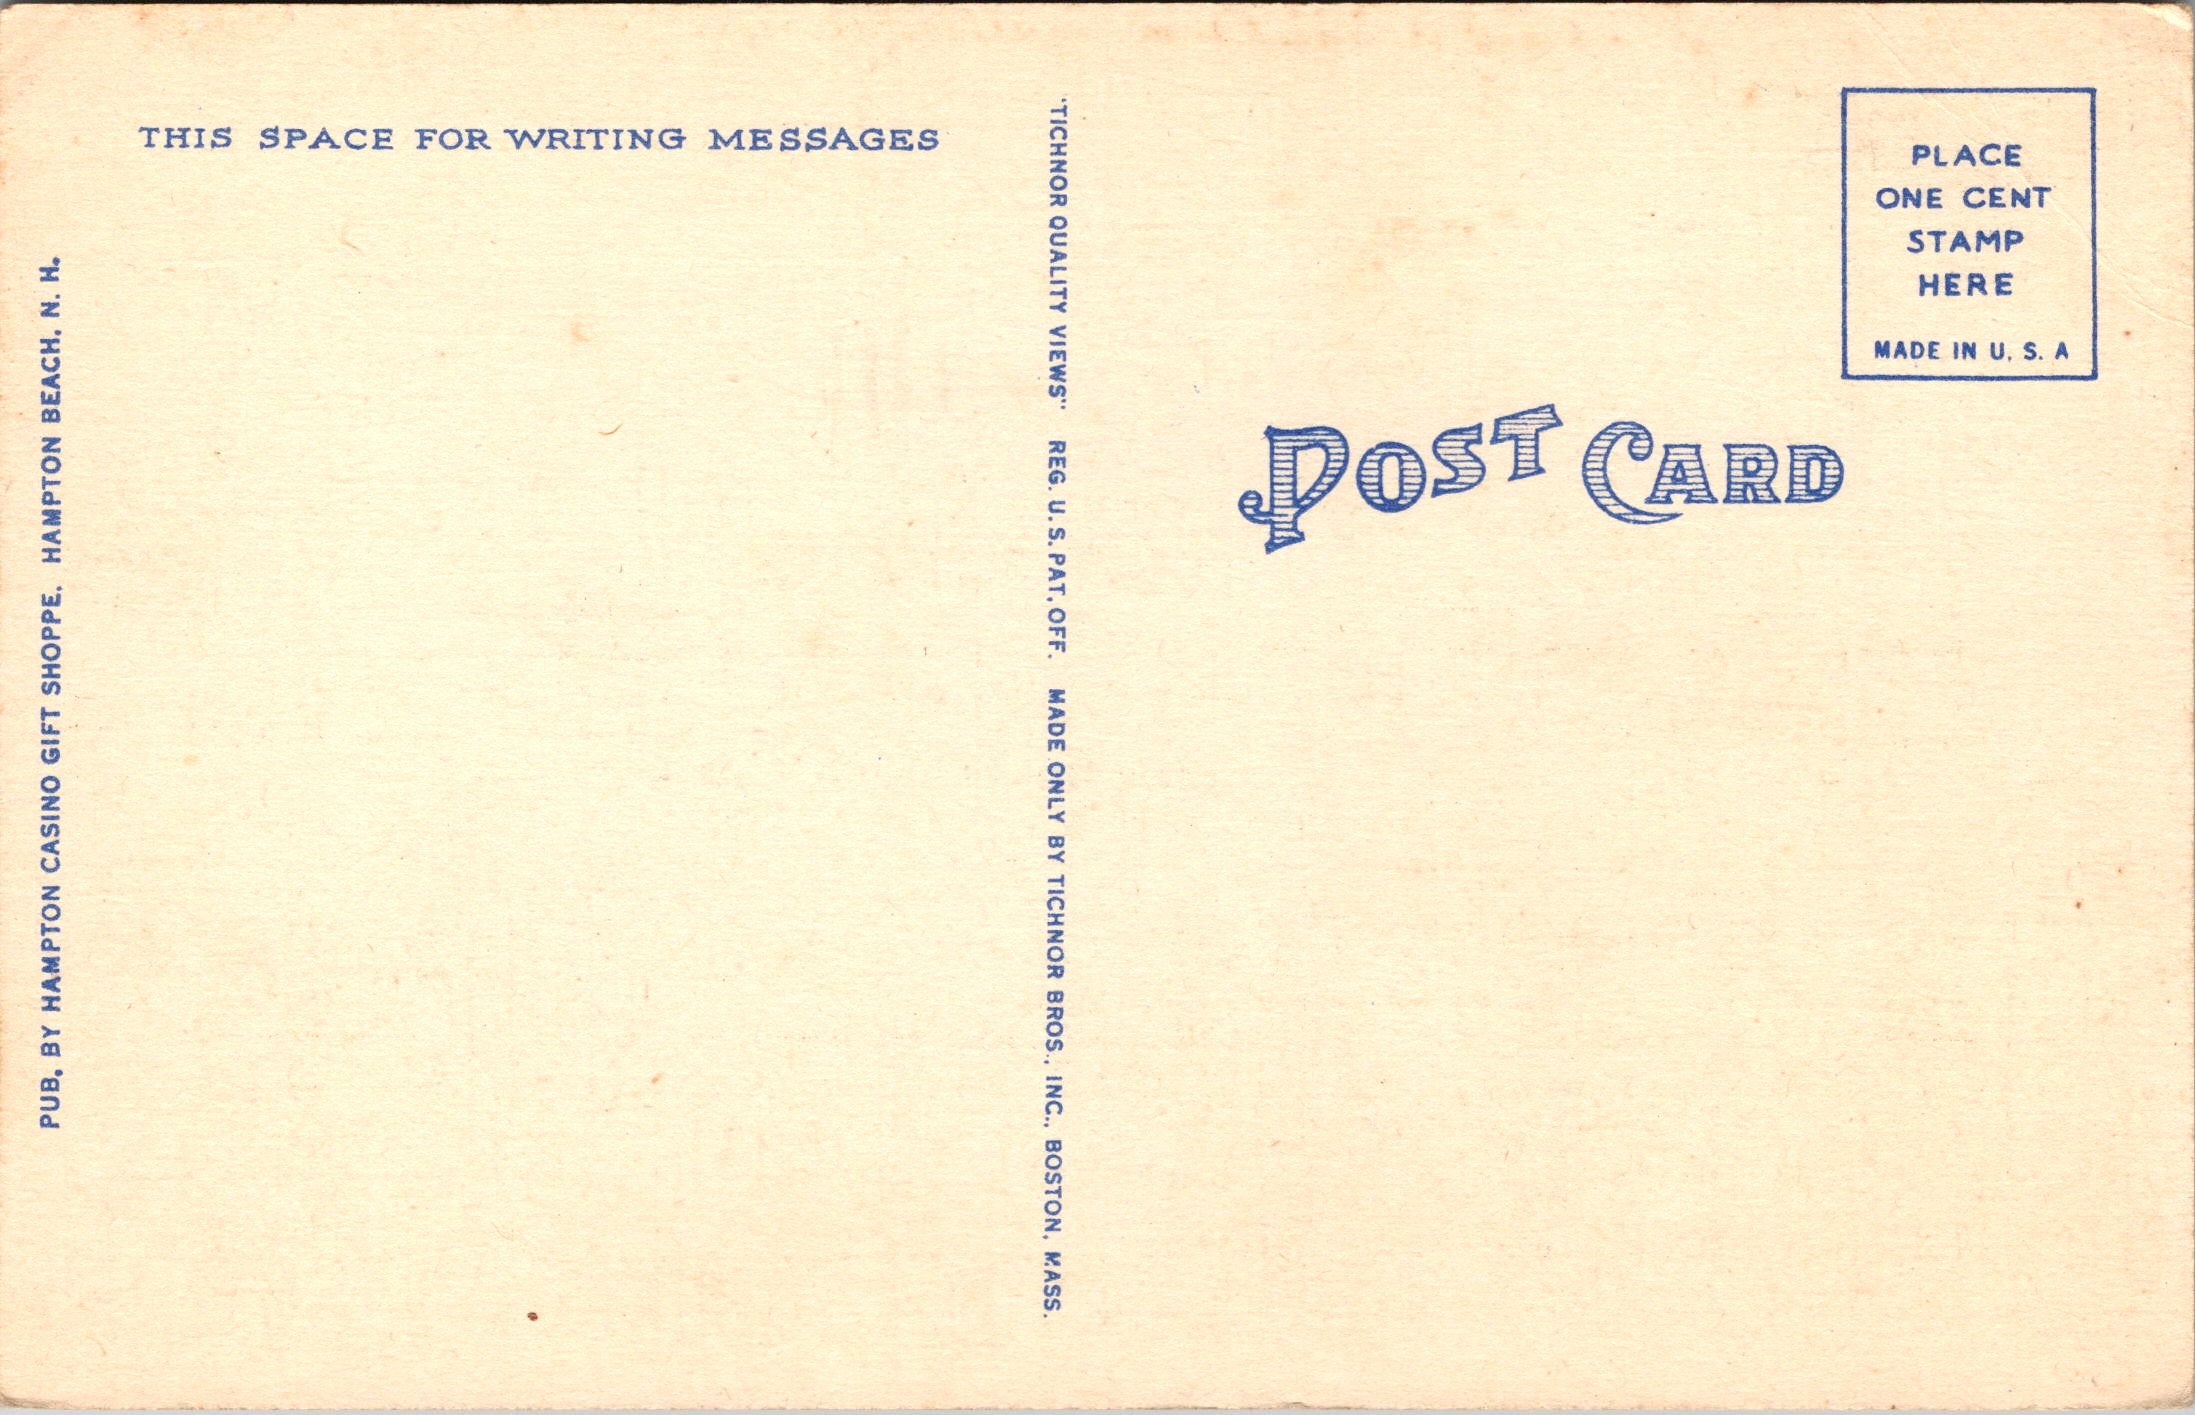 Ocean House, Hampton Beach, New Hampshire, USA, Vintage Post Card